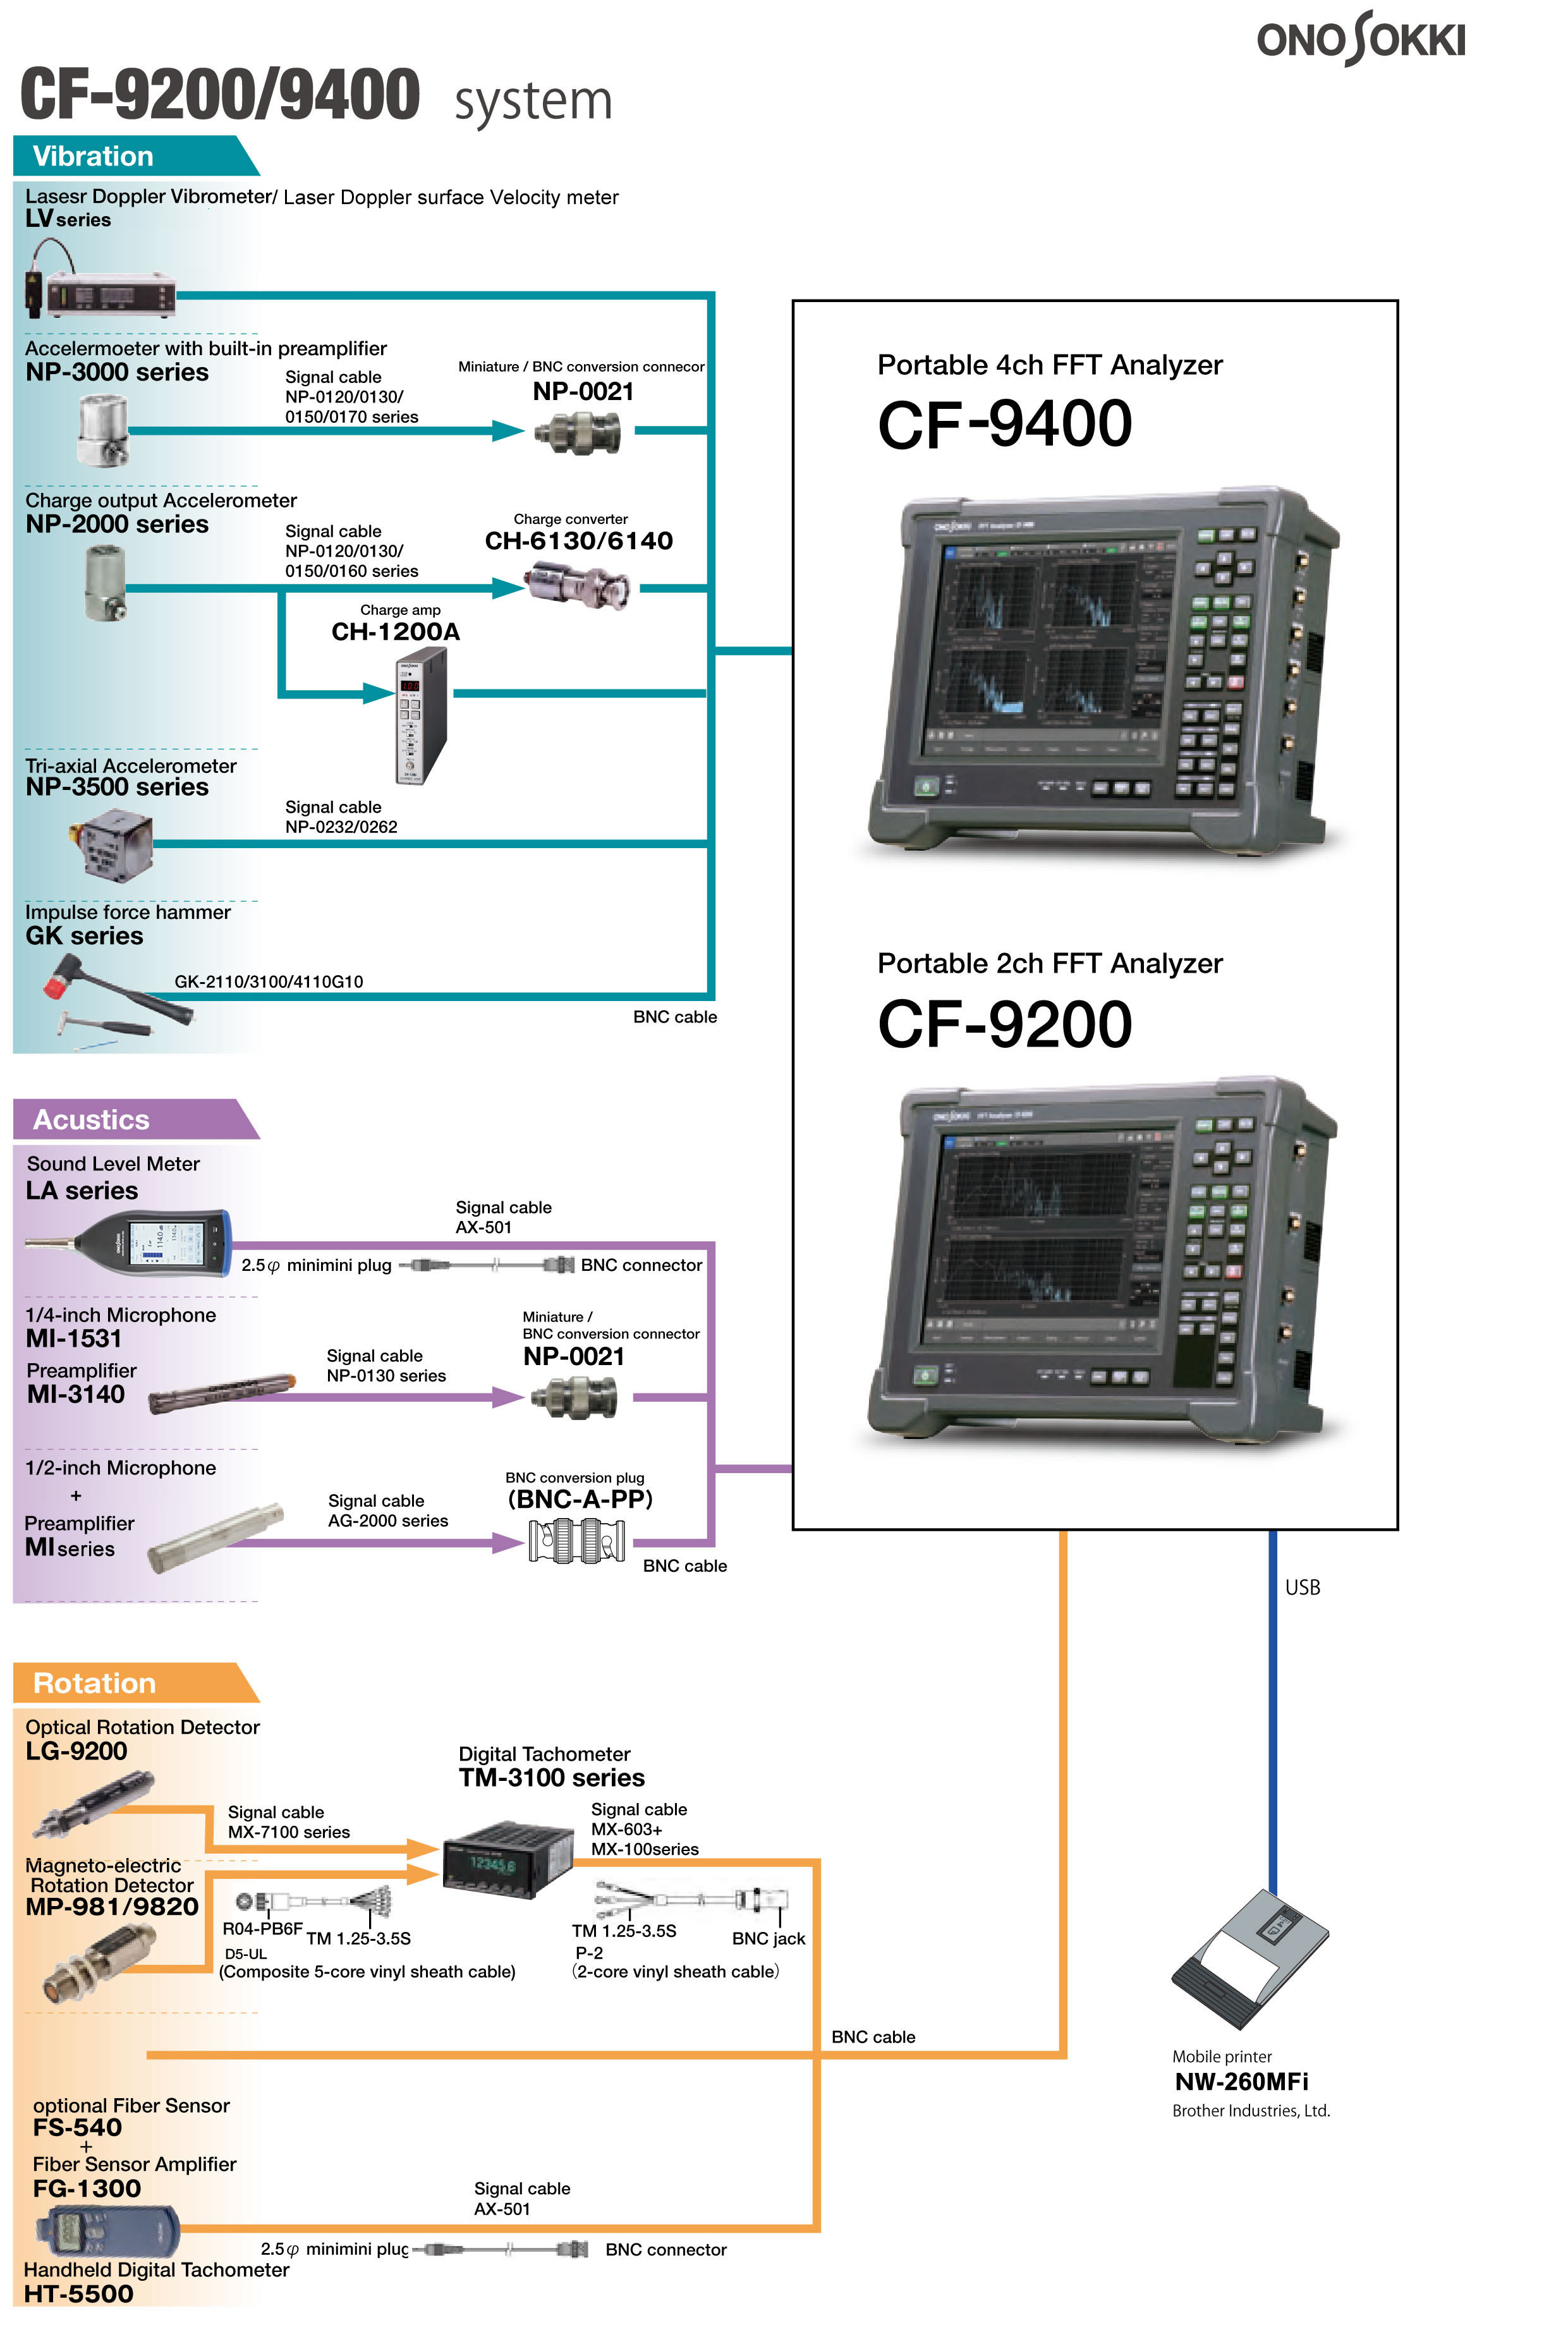 ONO SOKKI - CF-9200/9400 Portable 2 channel/4 channel FFT Analyzer